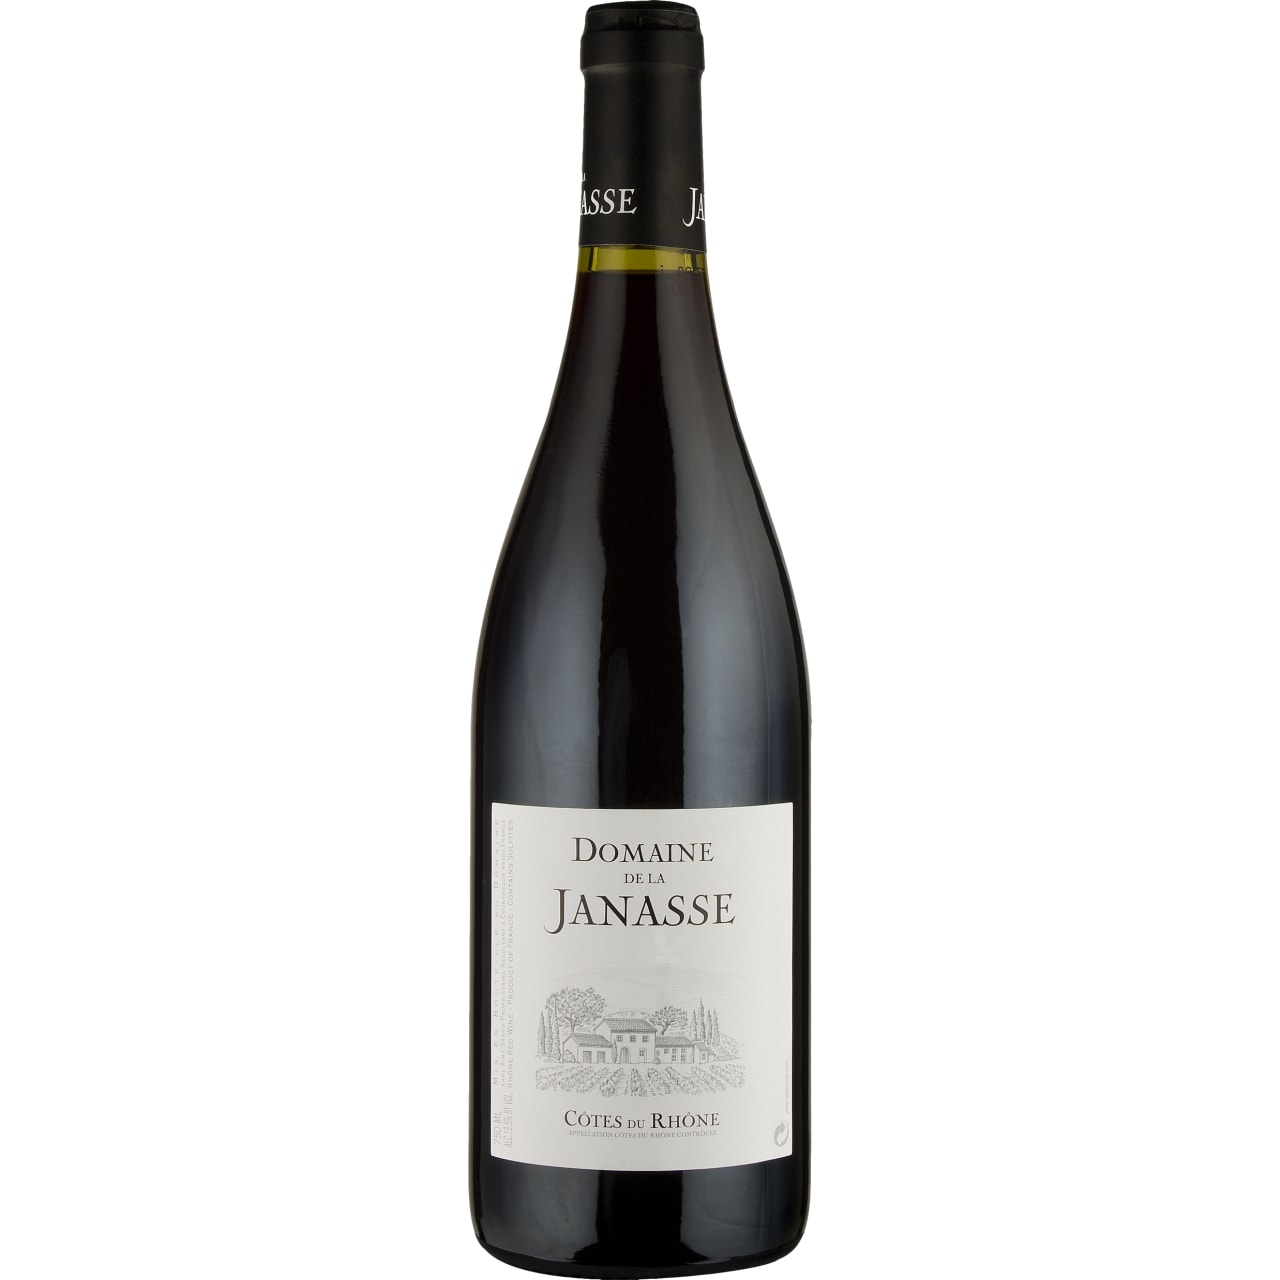 One of the southern Rhône valley's finest producers, Janasse's Côtes du Rhône puts other's Châteauneuf du Pape to shame.